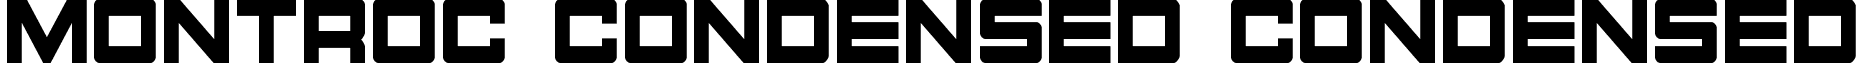 Montroc Condensed Condensed font - montroccond.ttf